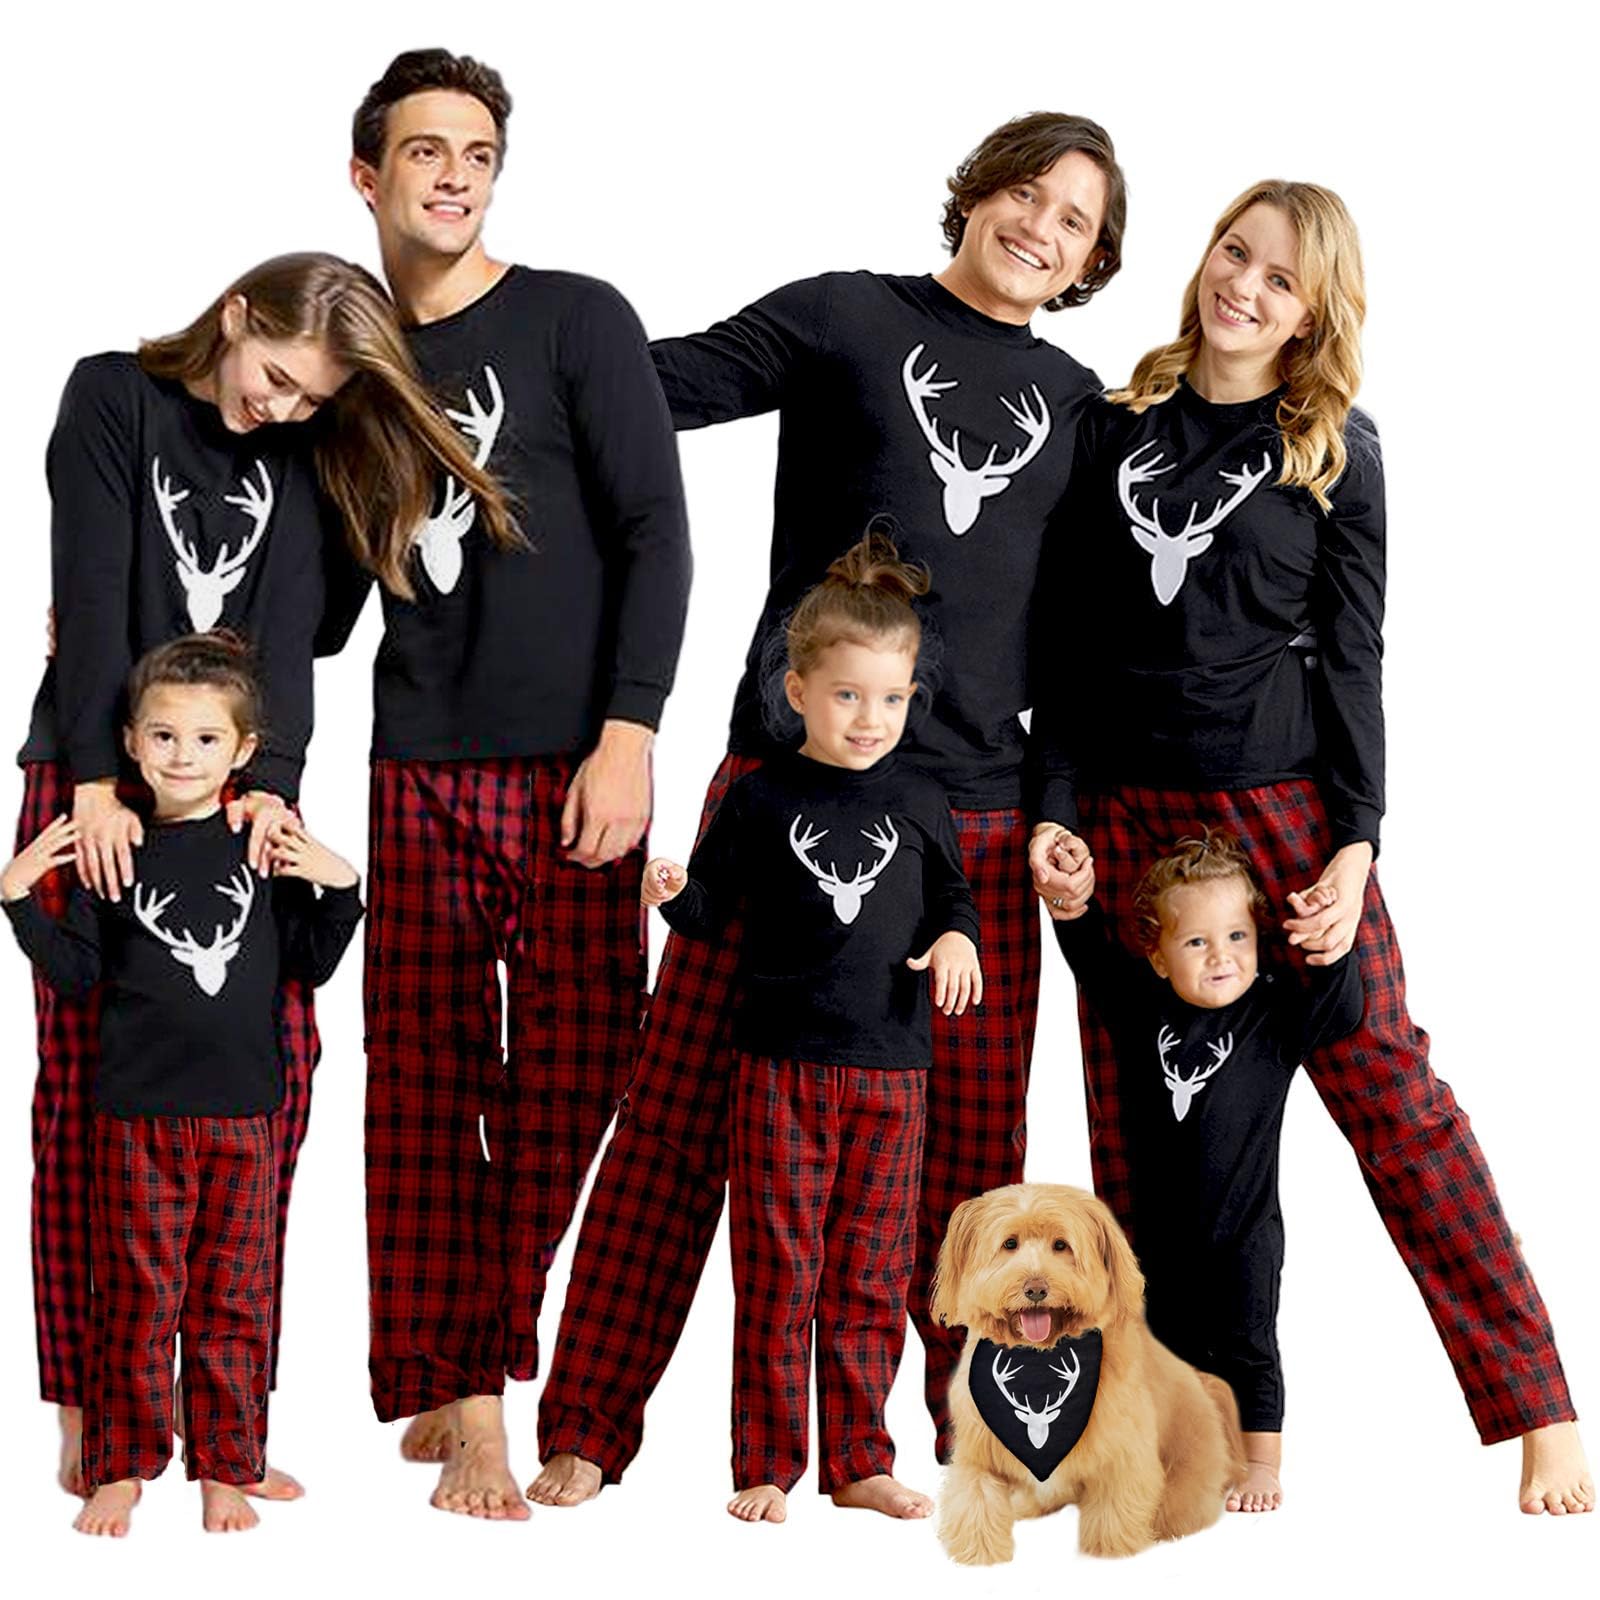 Green Elk Merry Christmas Matching Family Pajamas Sets Christmas PJ's  Letter Print Top And Plaid Pants